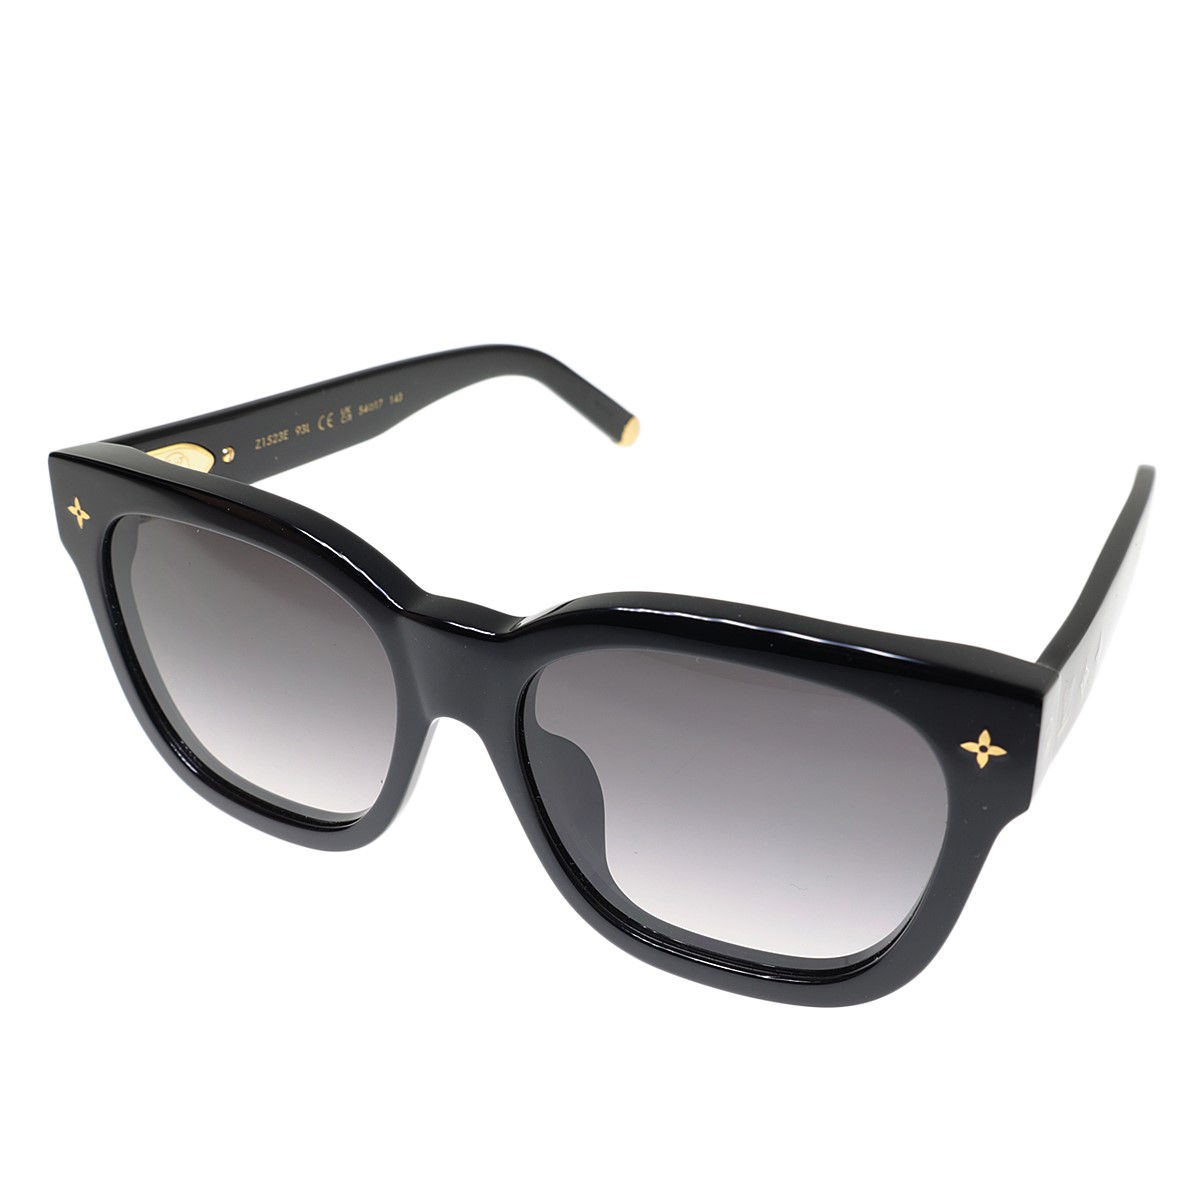 Louis Vuitton My Monogram Square Sunglasses (Z1523E)